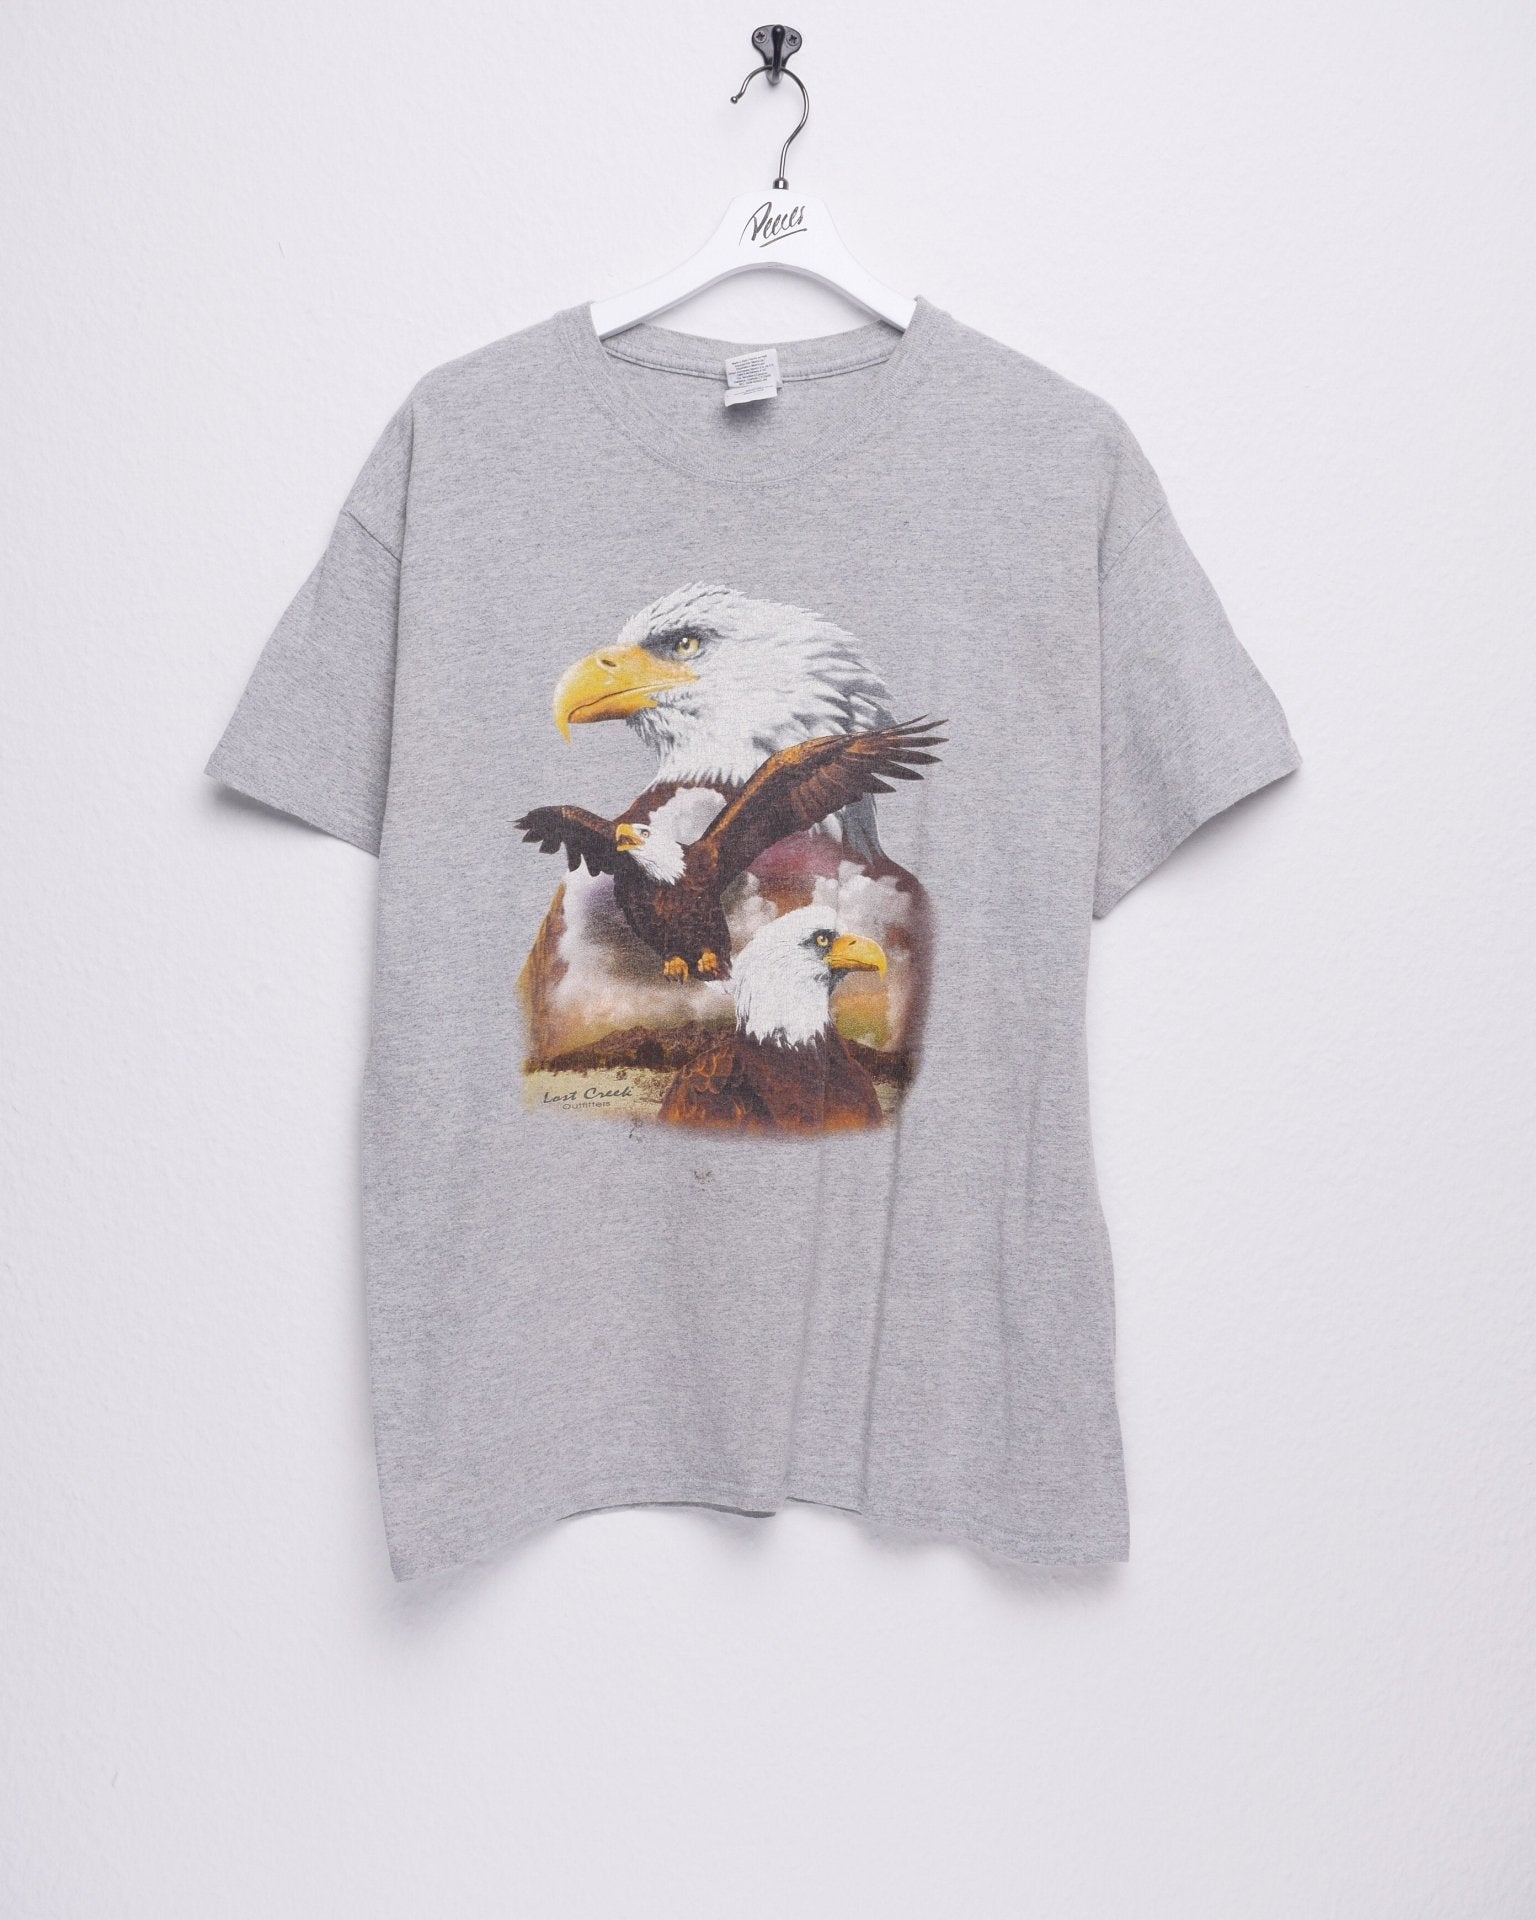 Eagles printed Graphic grey Shirt - Peeces